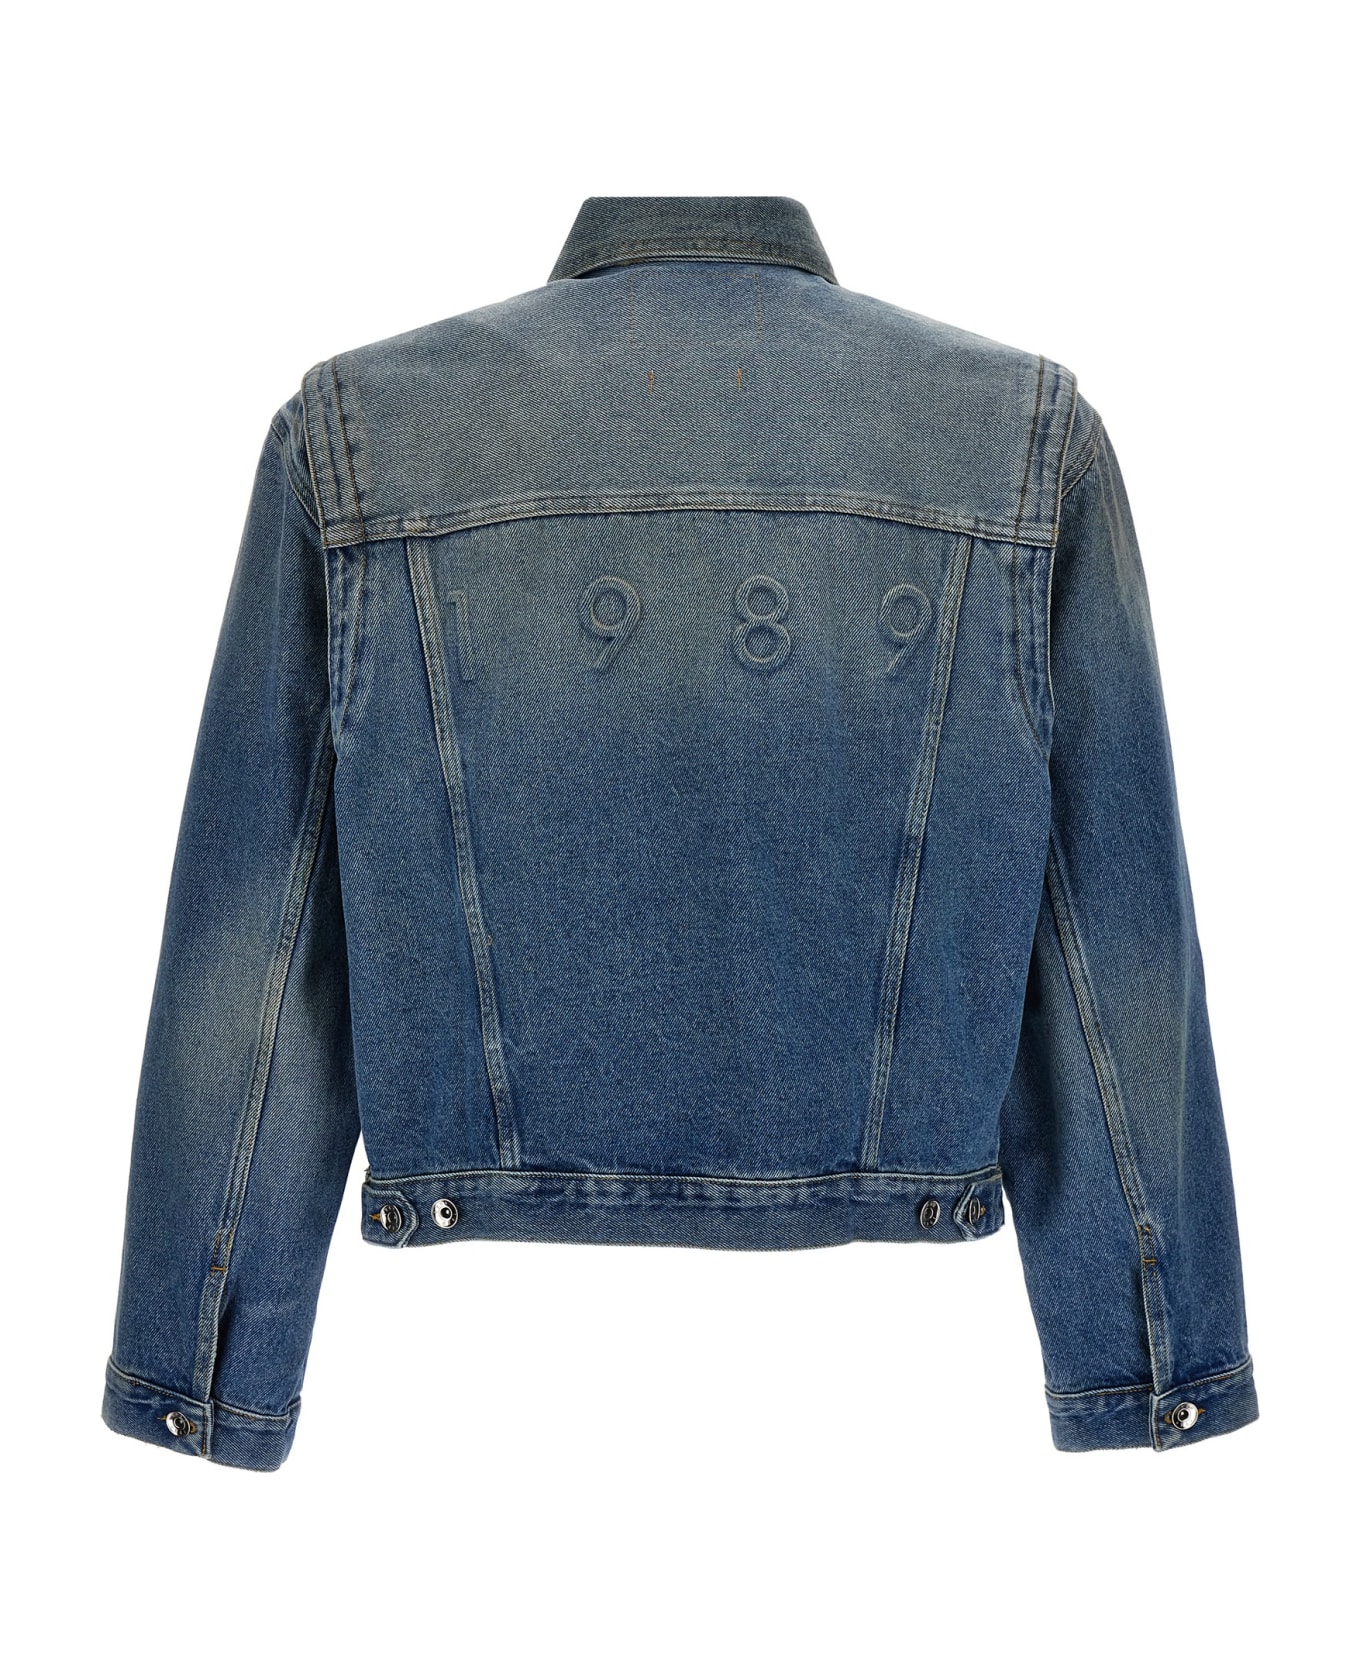 1989 Studio '50s Rodeo' Denim Jacket - Blue ジャケット